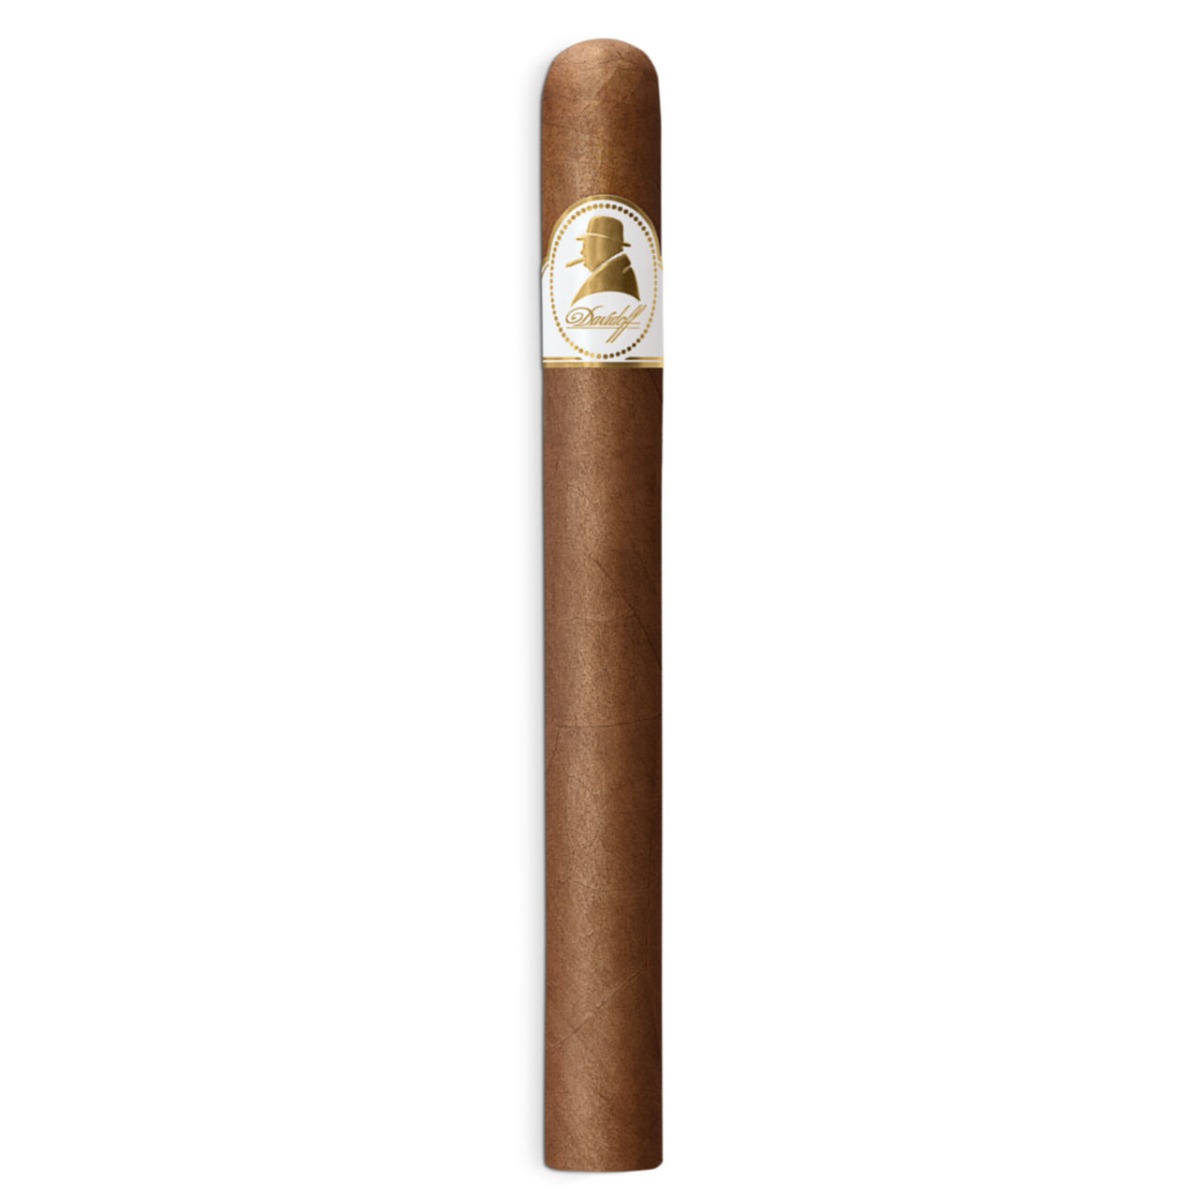 Davidoff Winston Churchill Churchill Single Cigar